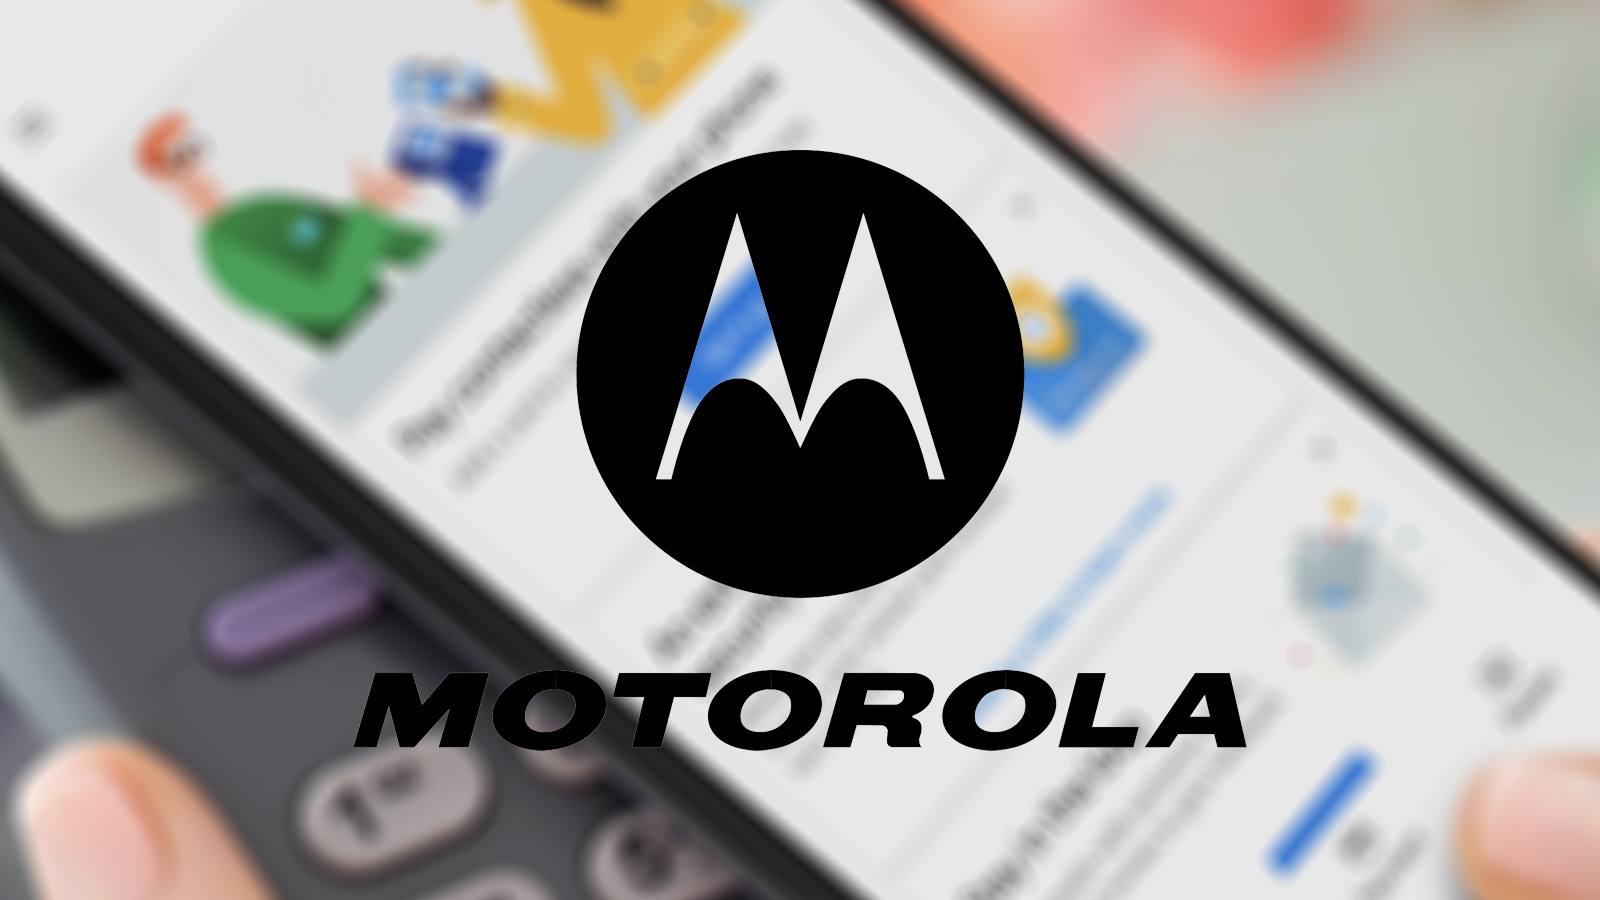 Few secrets remain around new Motorola flagship